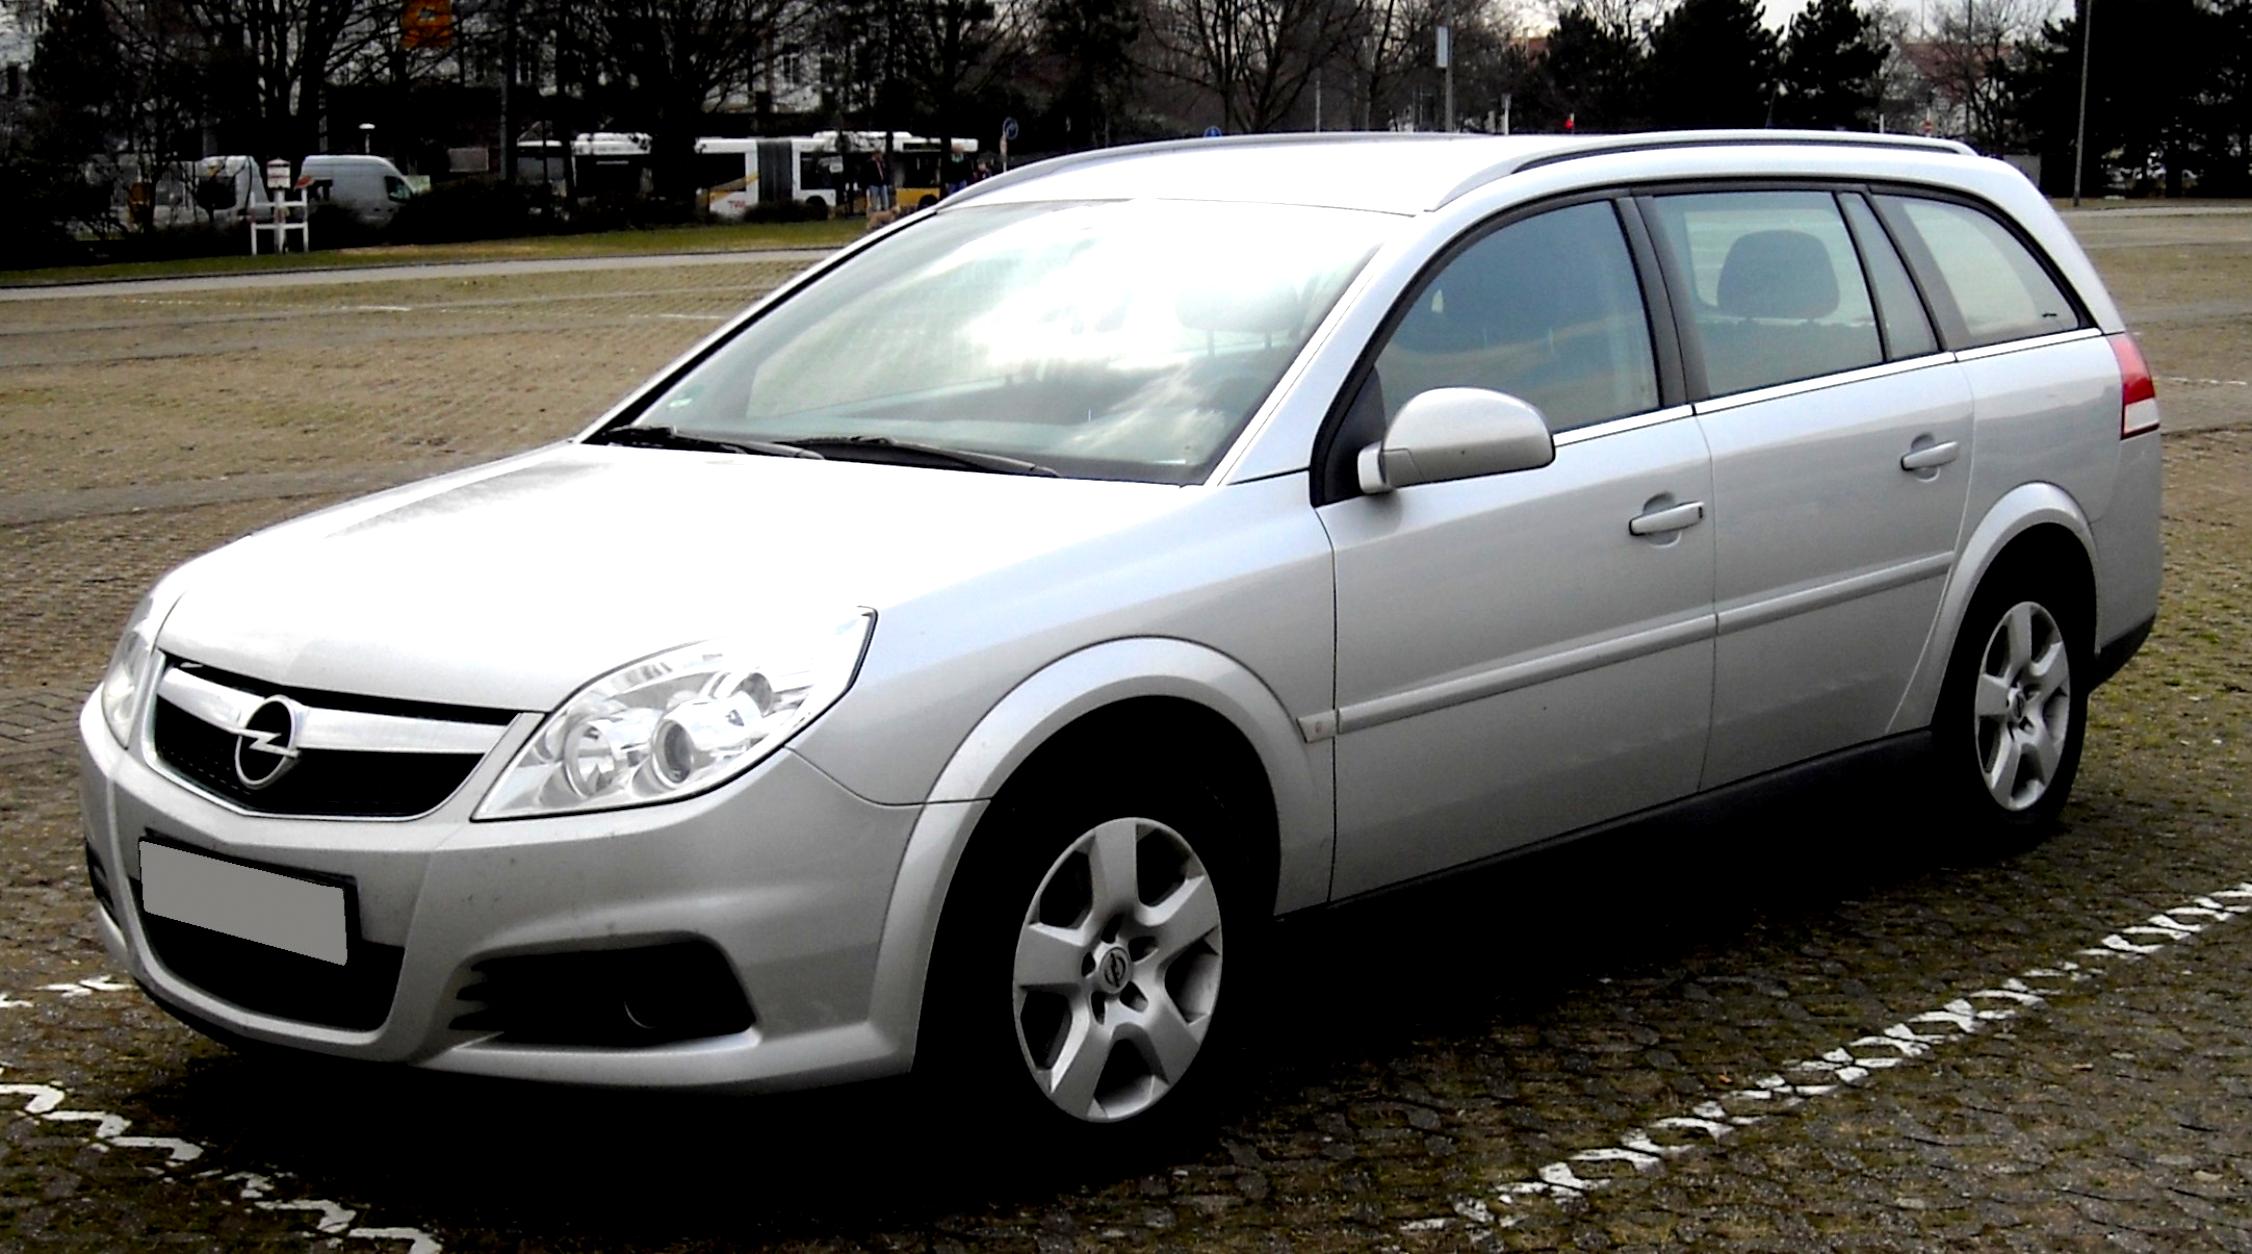 2007 универсал дизель. Opel Vectra c 2005 универсал. Opel Vectra универсал 2006. Opel Vectra 2008 универсал. Опель Вектра 2006 универсал.